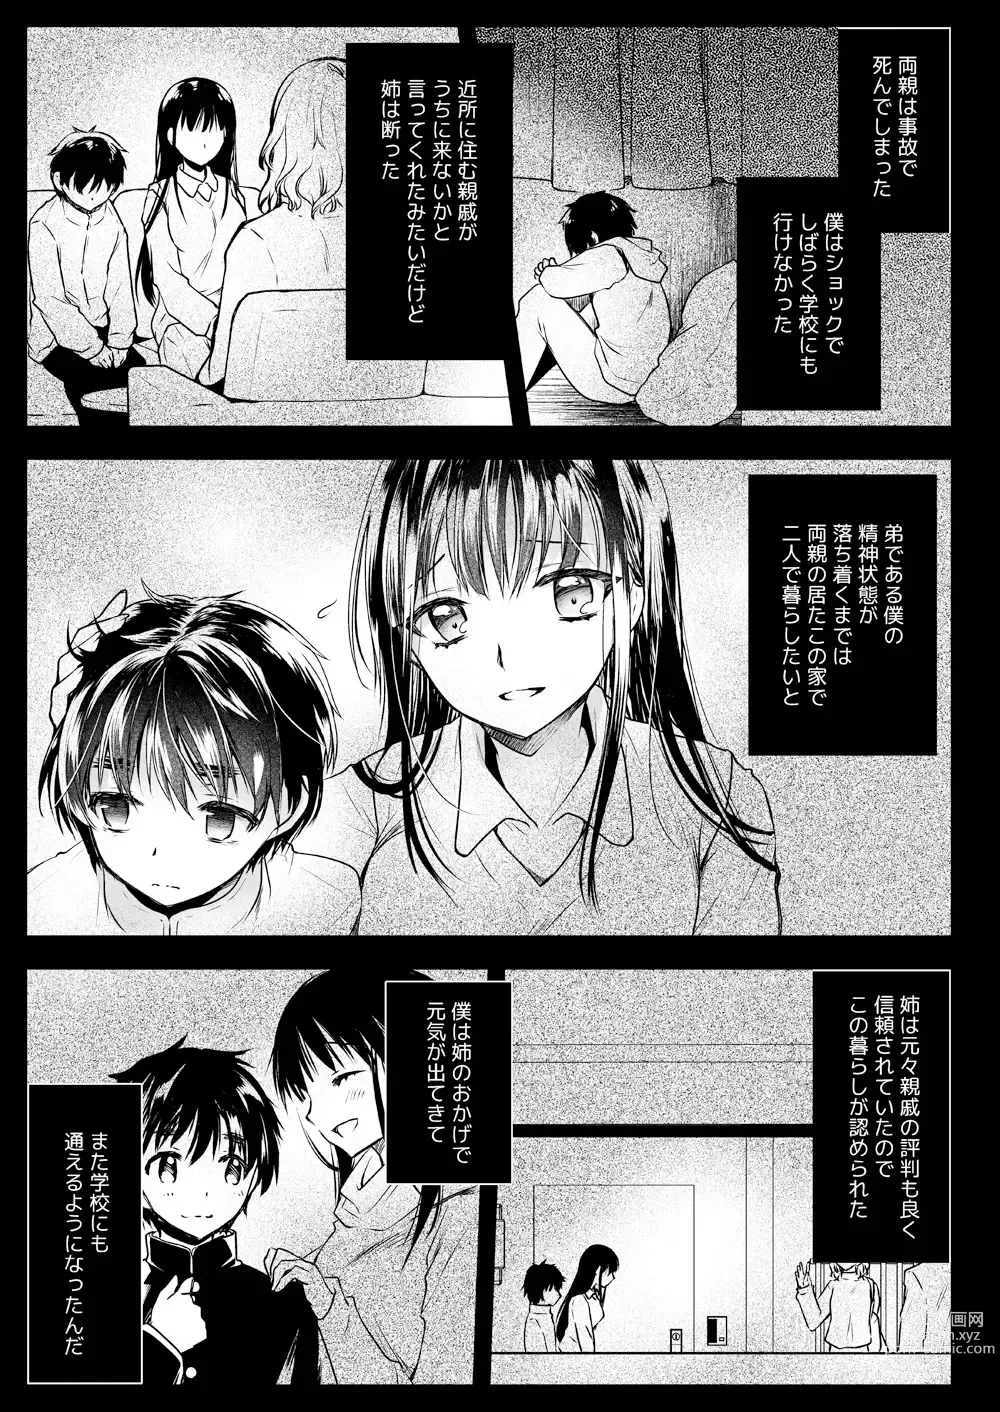 Page 4 of manga Kyou izon Kyoudai